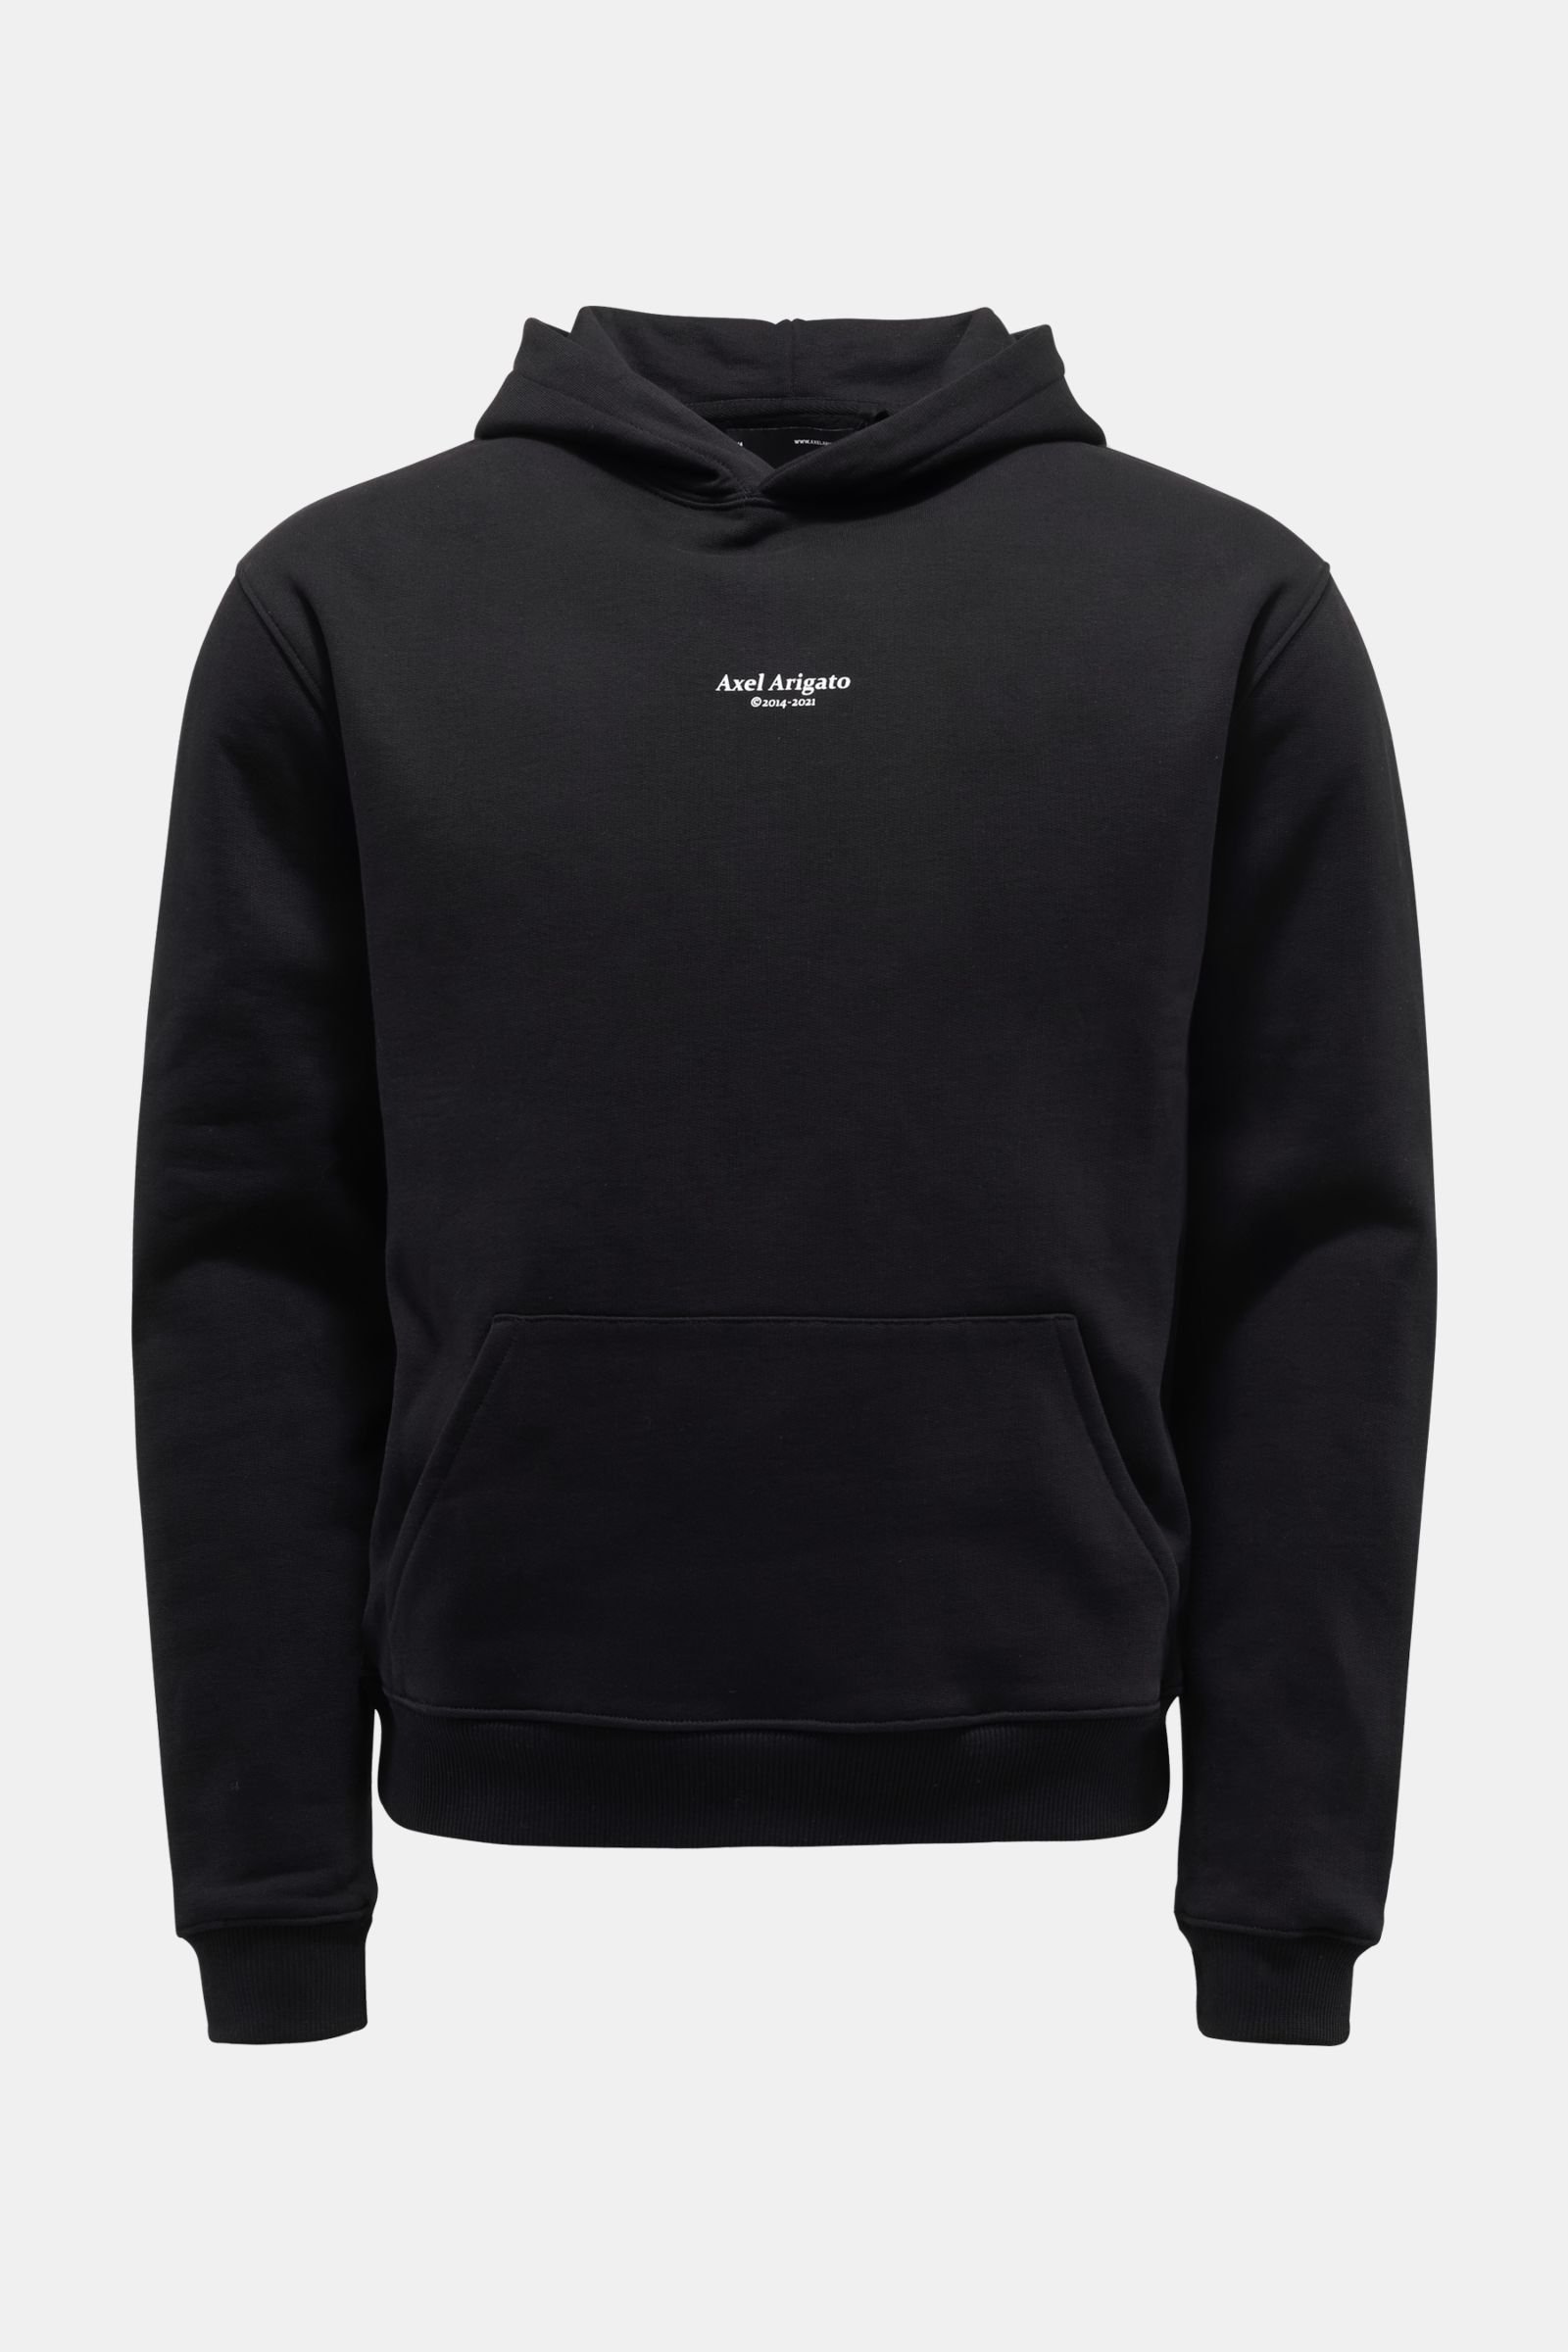 AXEL ARIGATO hooded jumper 'Focus Logo Hoodie' black | BRAUN Hamburg